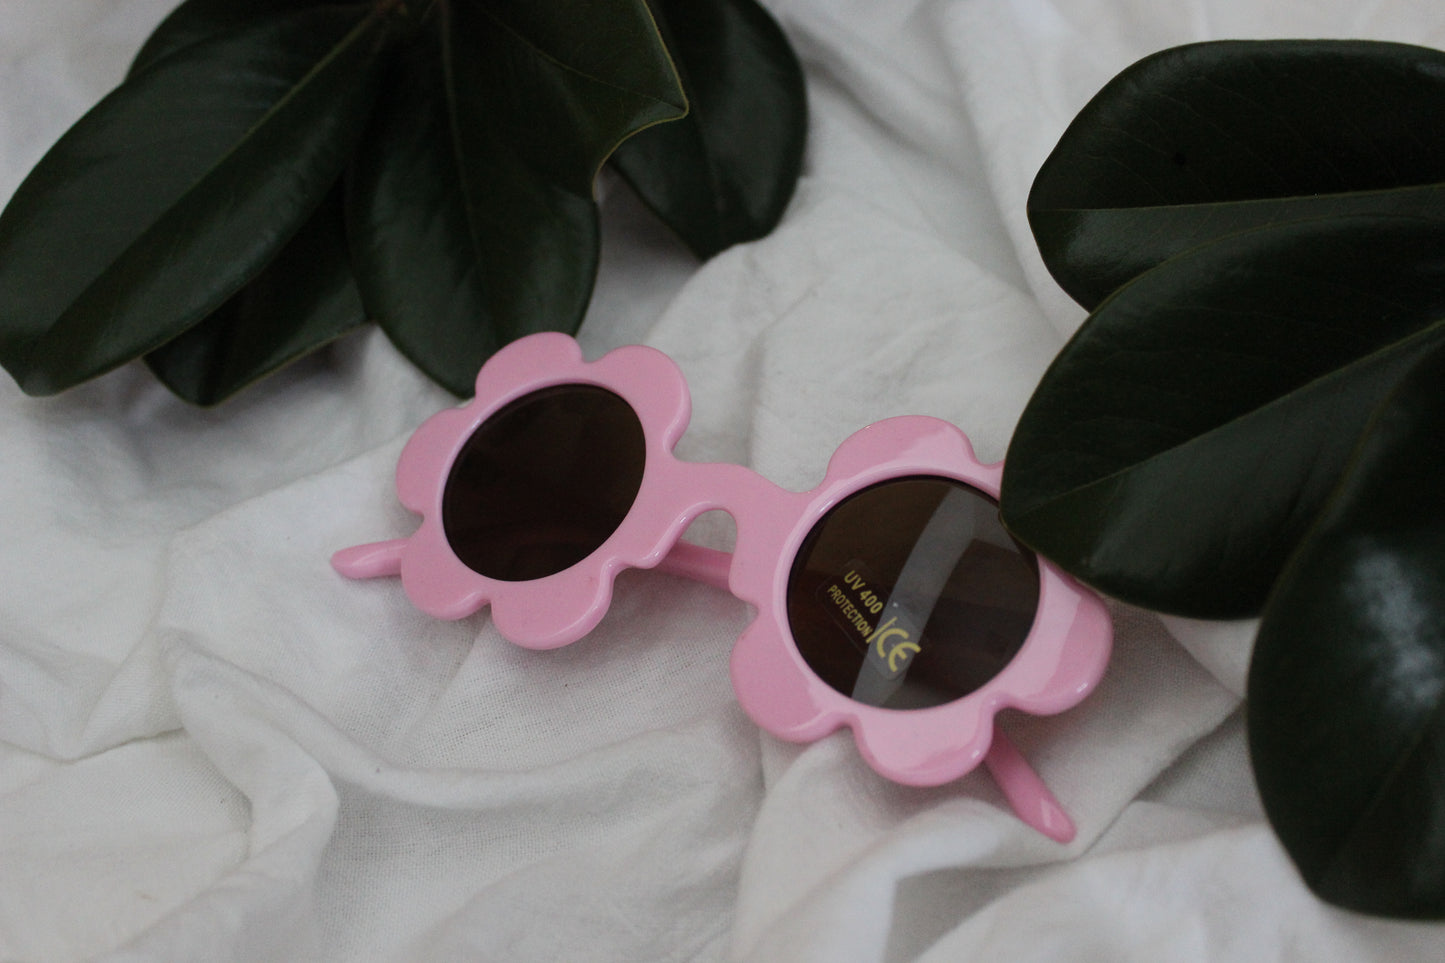 Daisy Sunglasses - pink